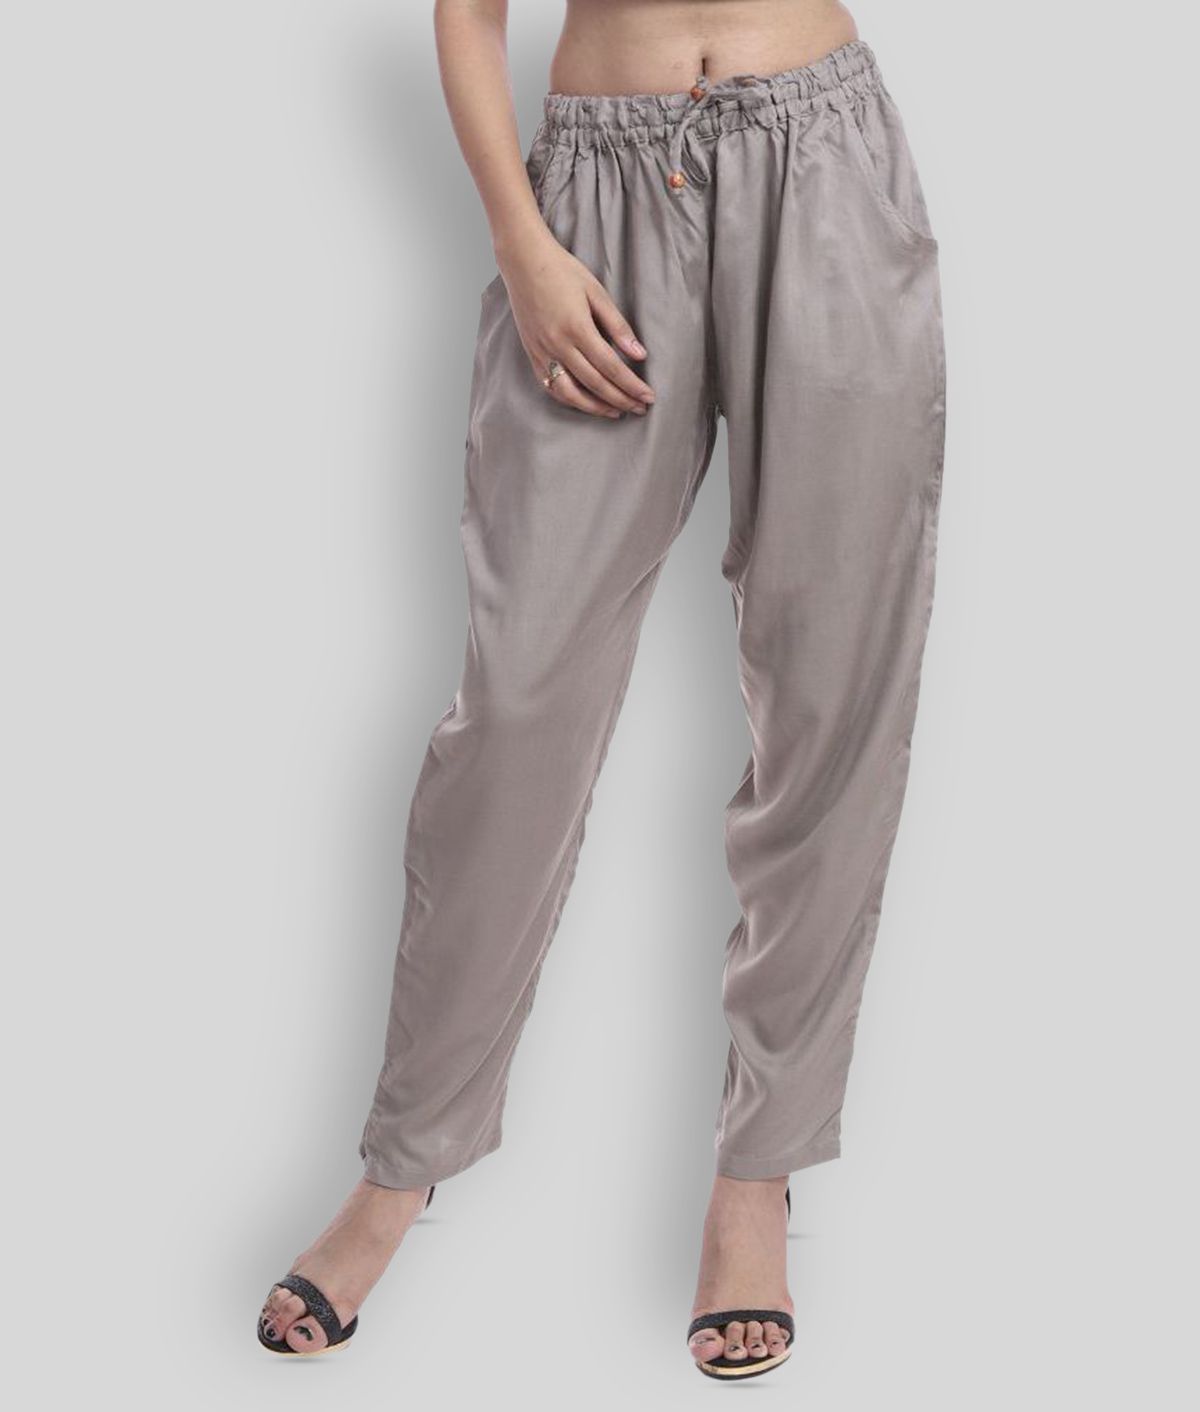     			Lee Moda - Light Grey Rayon Regular Fit Women's Casual Pants  ( Pack of 1 )